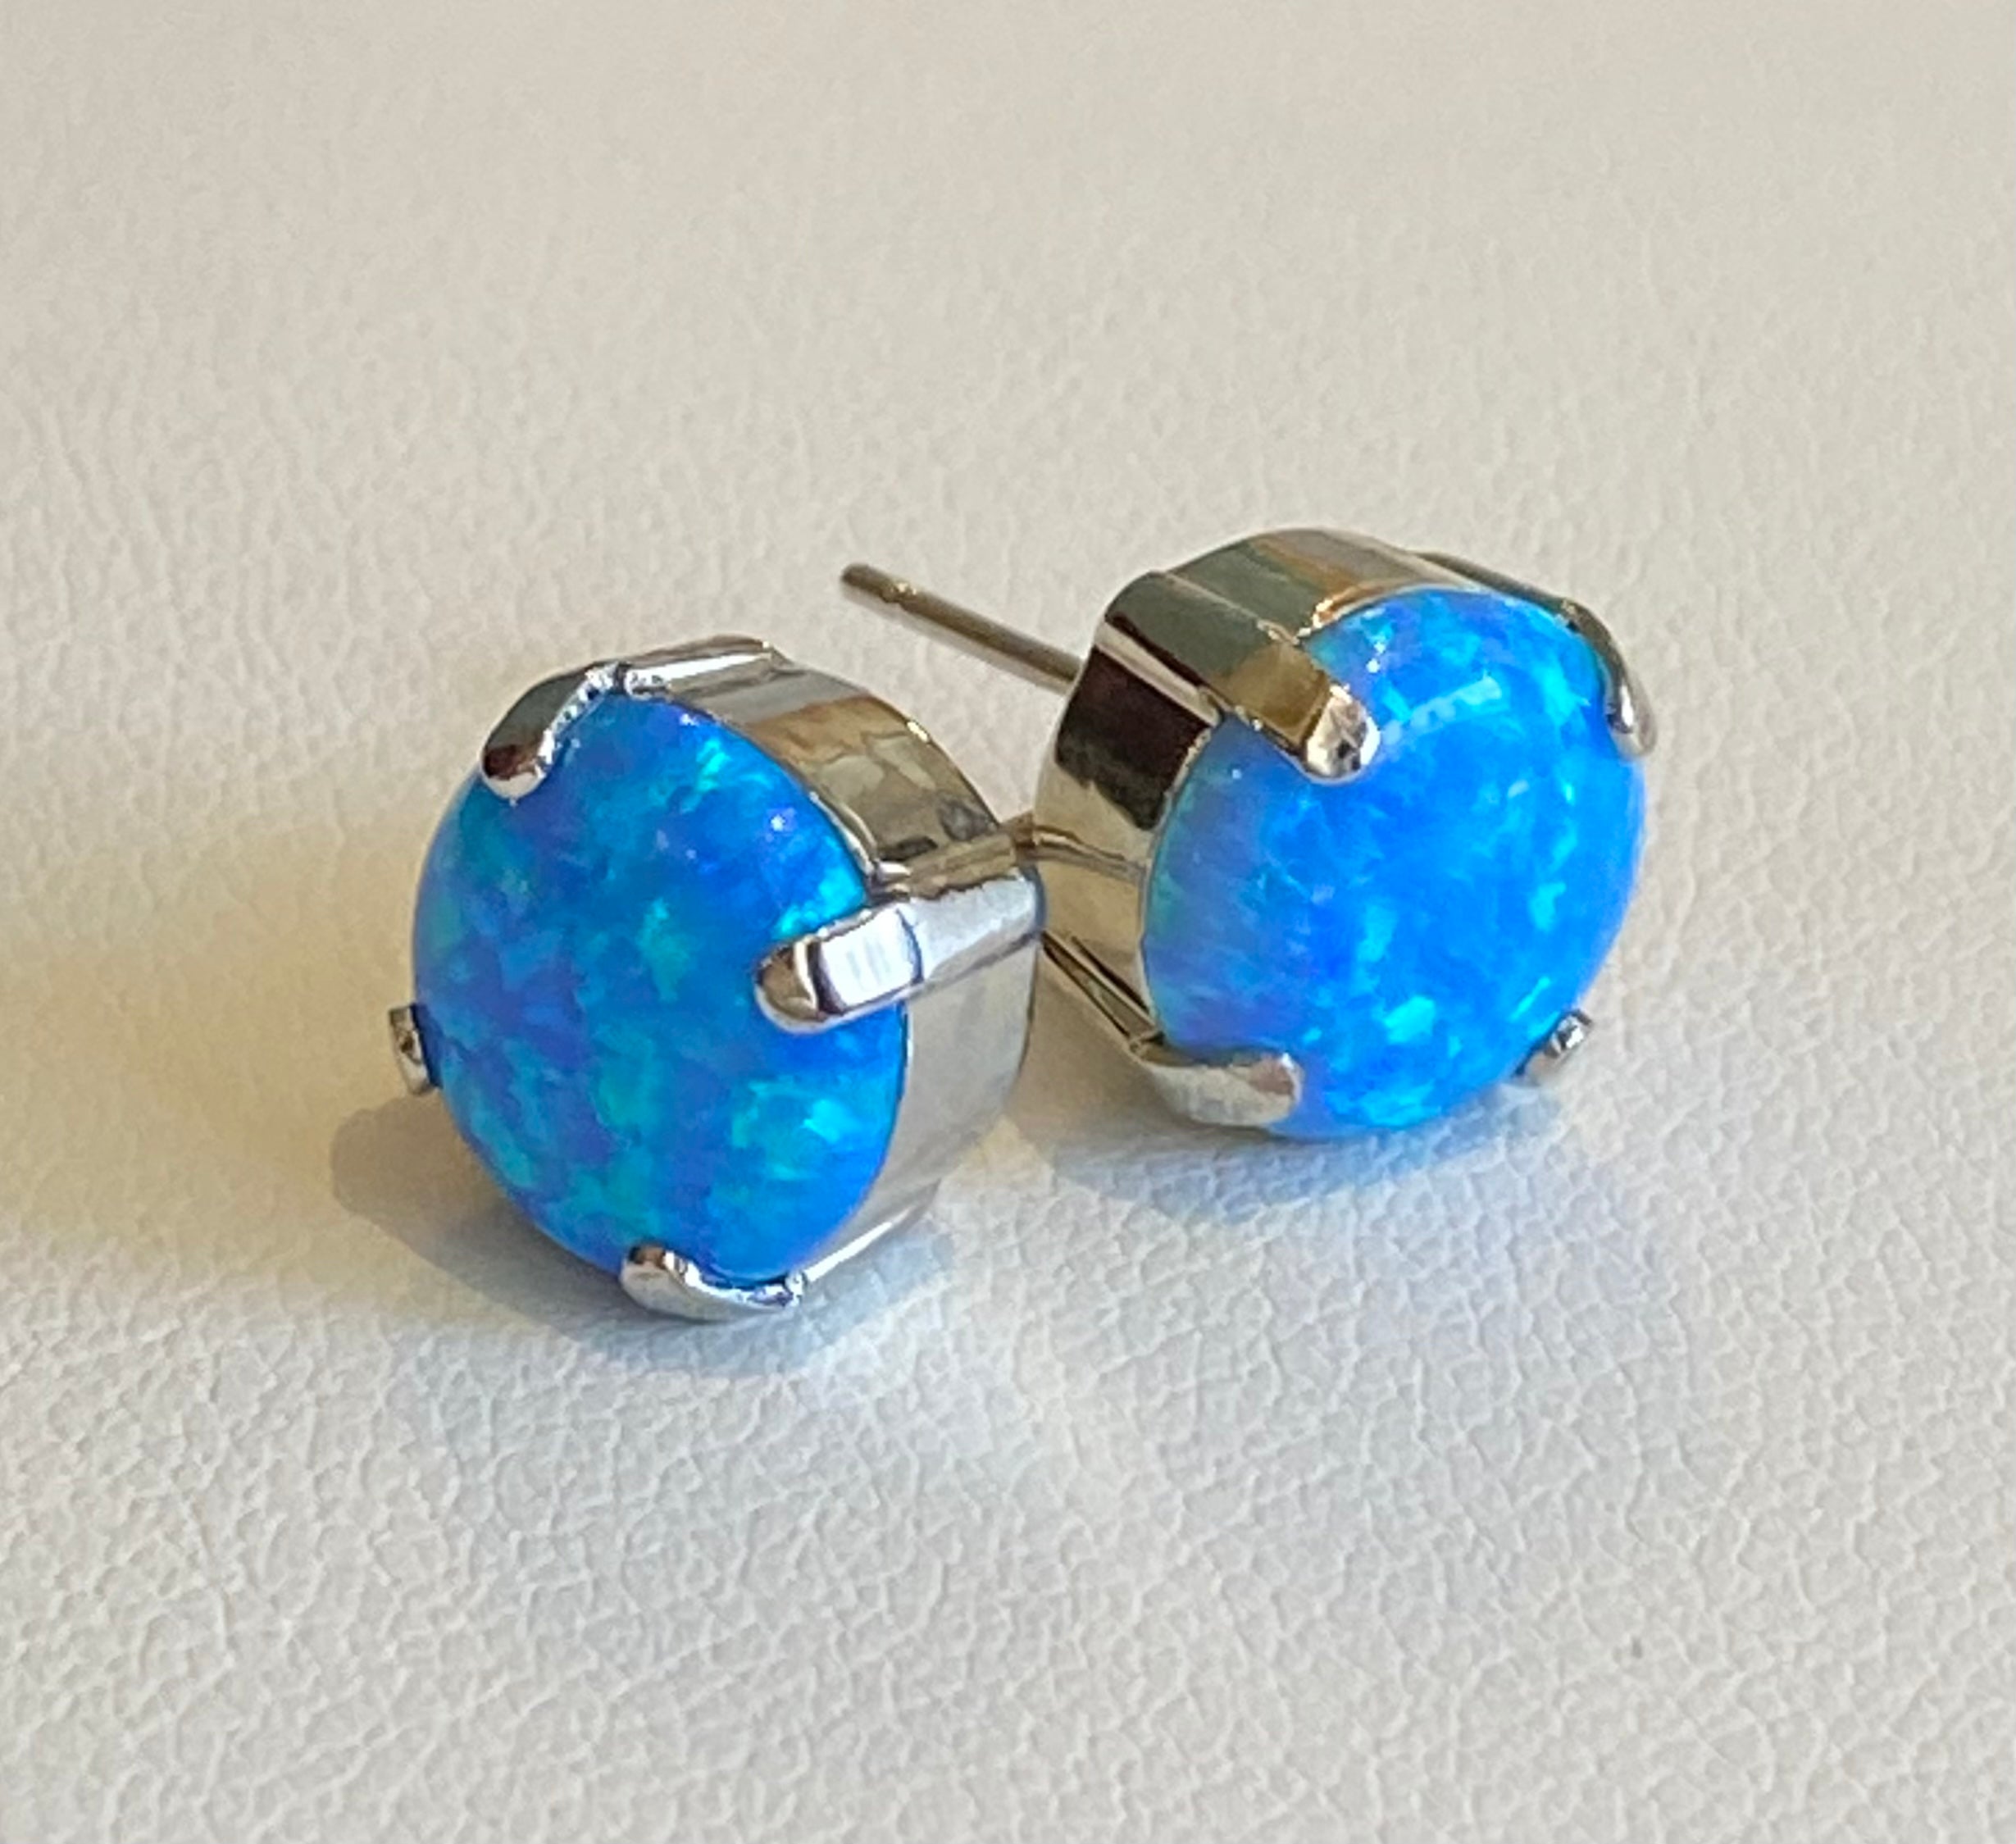 Mariana Silver Large Single Stone Post Earrings in Blue “Italian Ice”